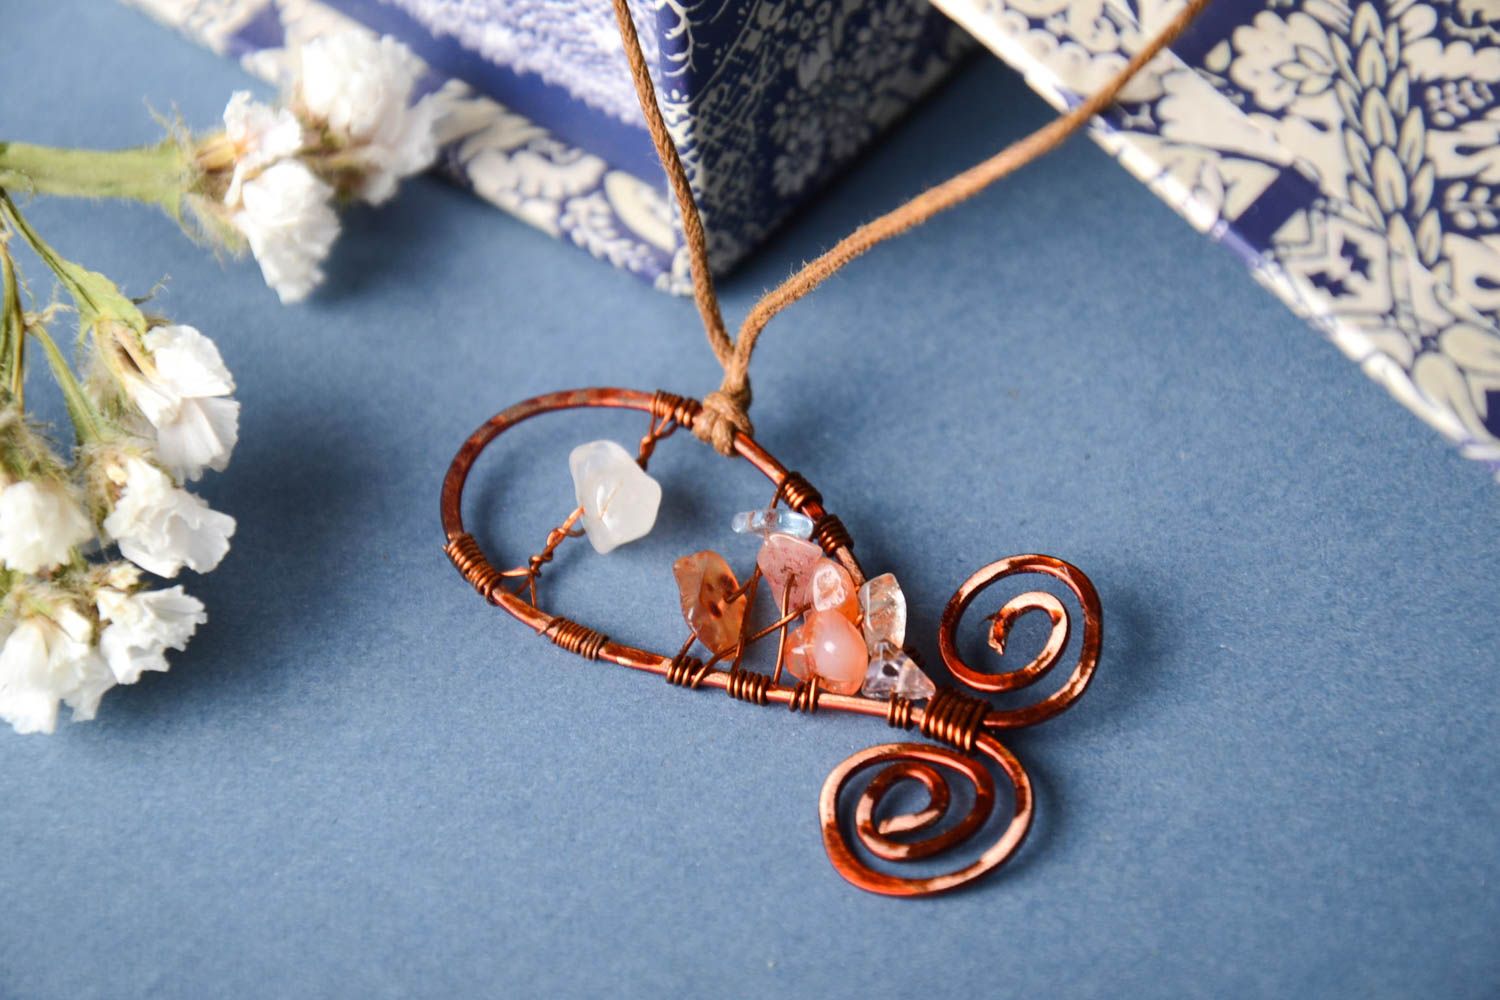 Handmade pendant unusual pendant designer accessory copper pendant gift ideas photo 1